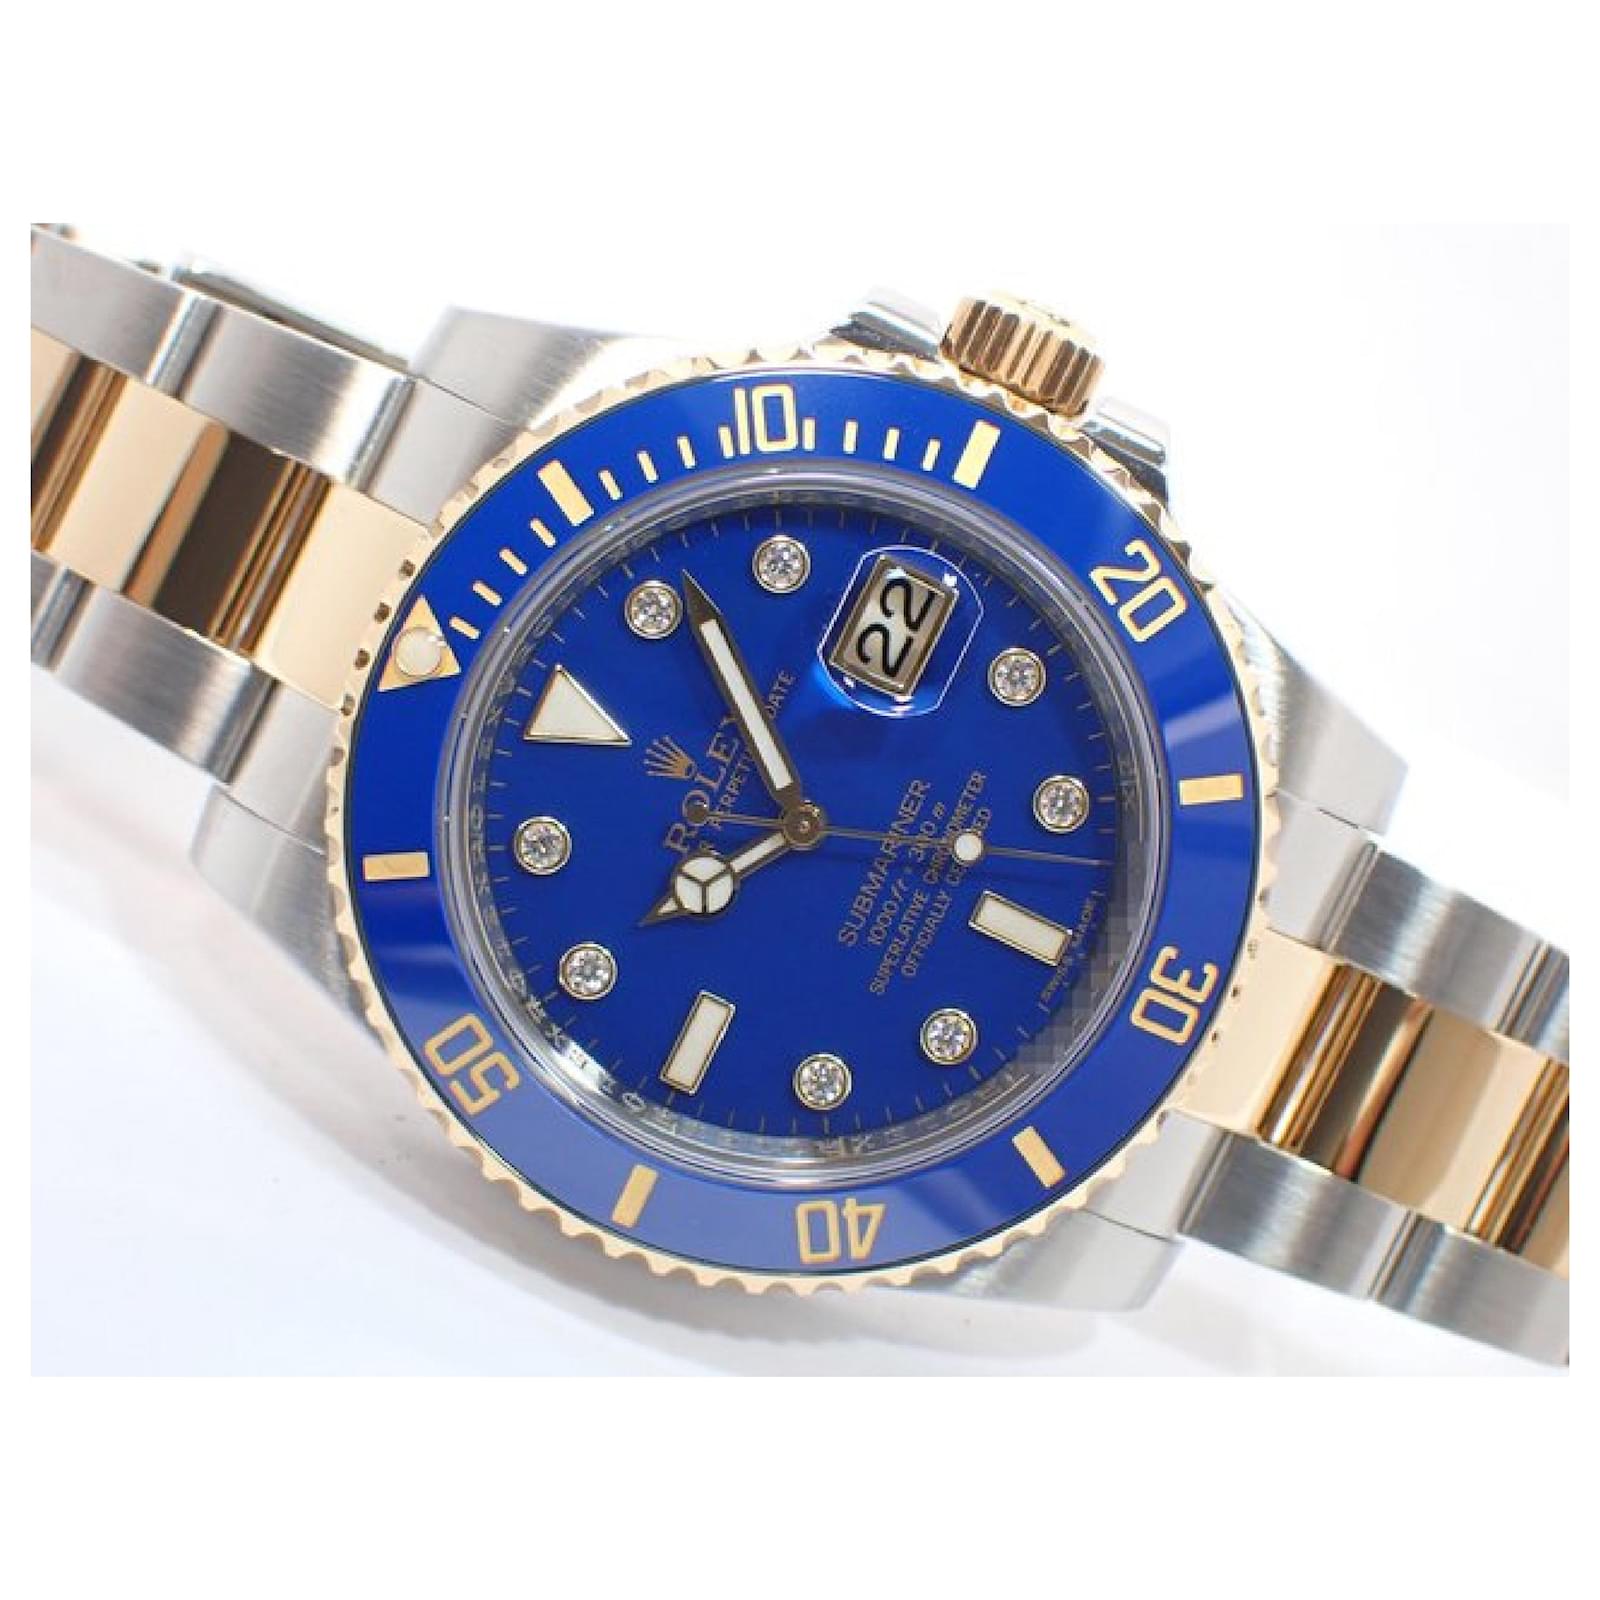 Rolex Men's Submariner Automatic Watch